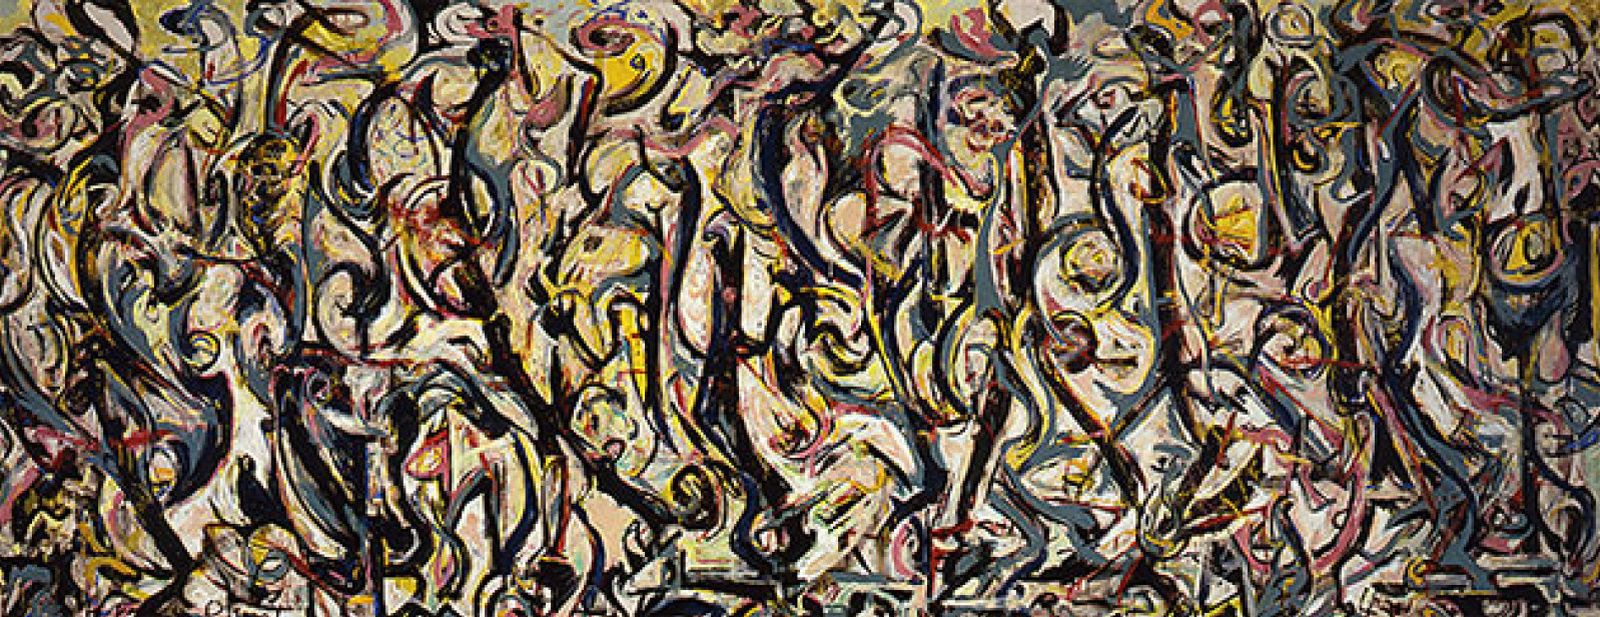 Foto: ¿El secreto mejor guardado de Jackson Pollock?